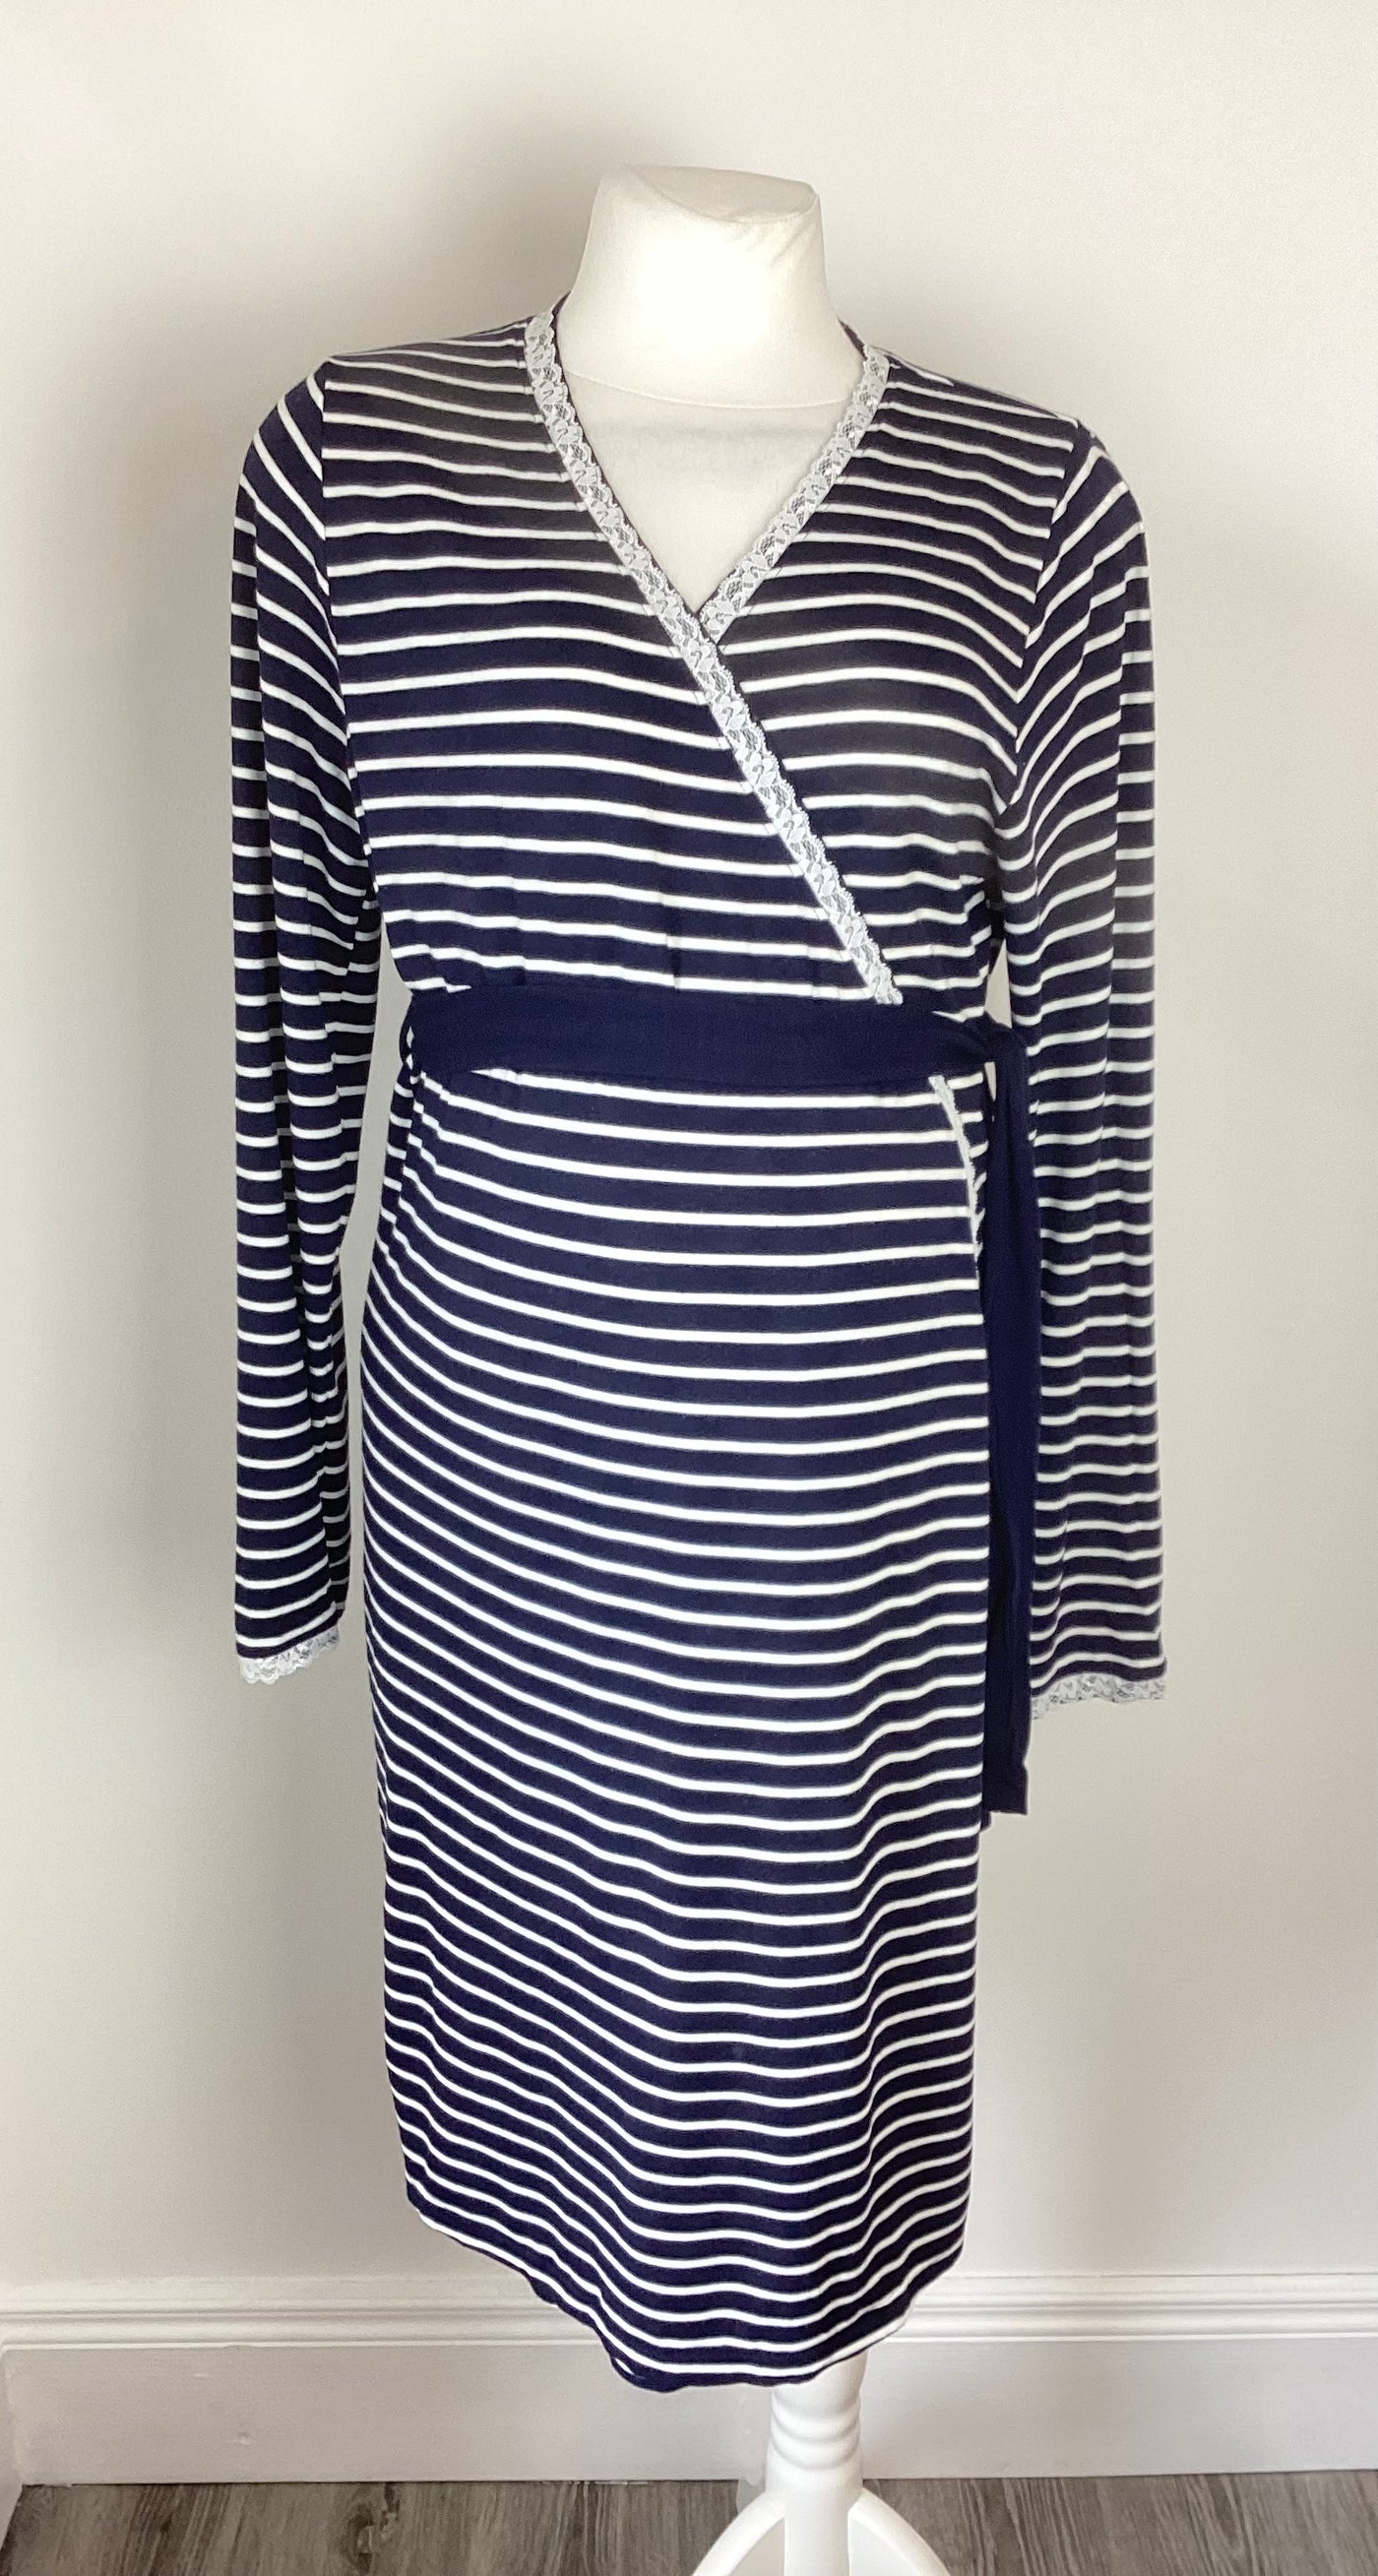 Jojo Maman Bebe navy & white stripe lace trim dressing gown with waist tie - Size S (Approx UK 8/10)